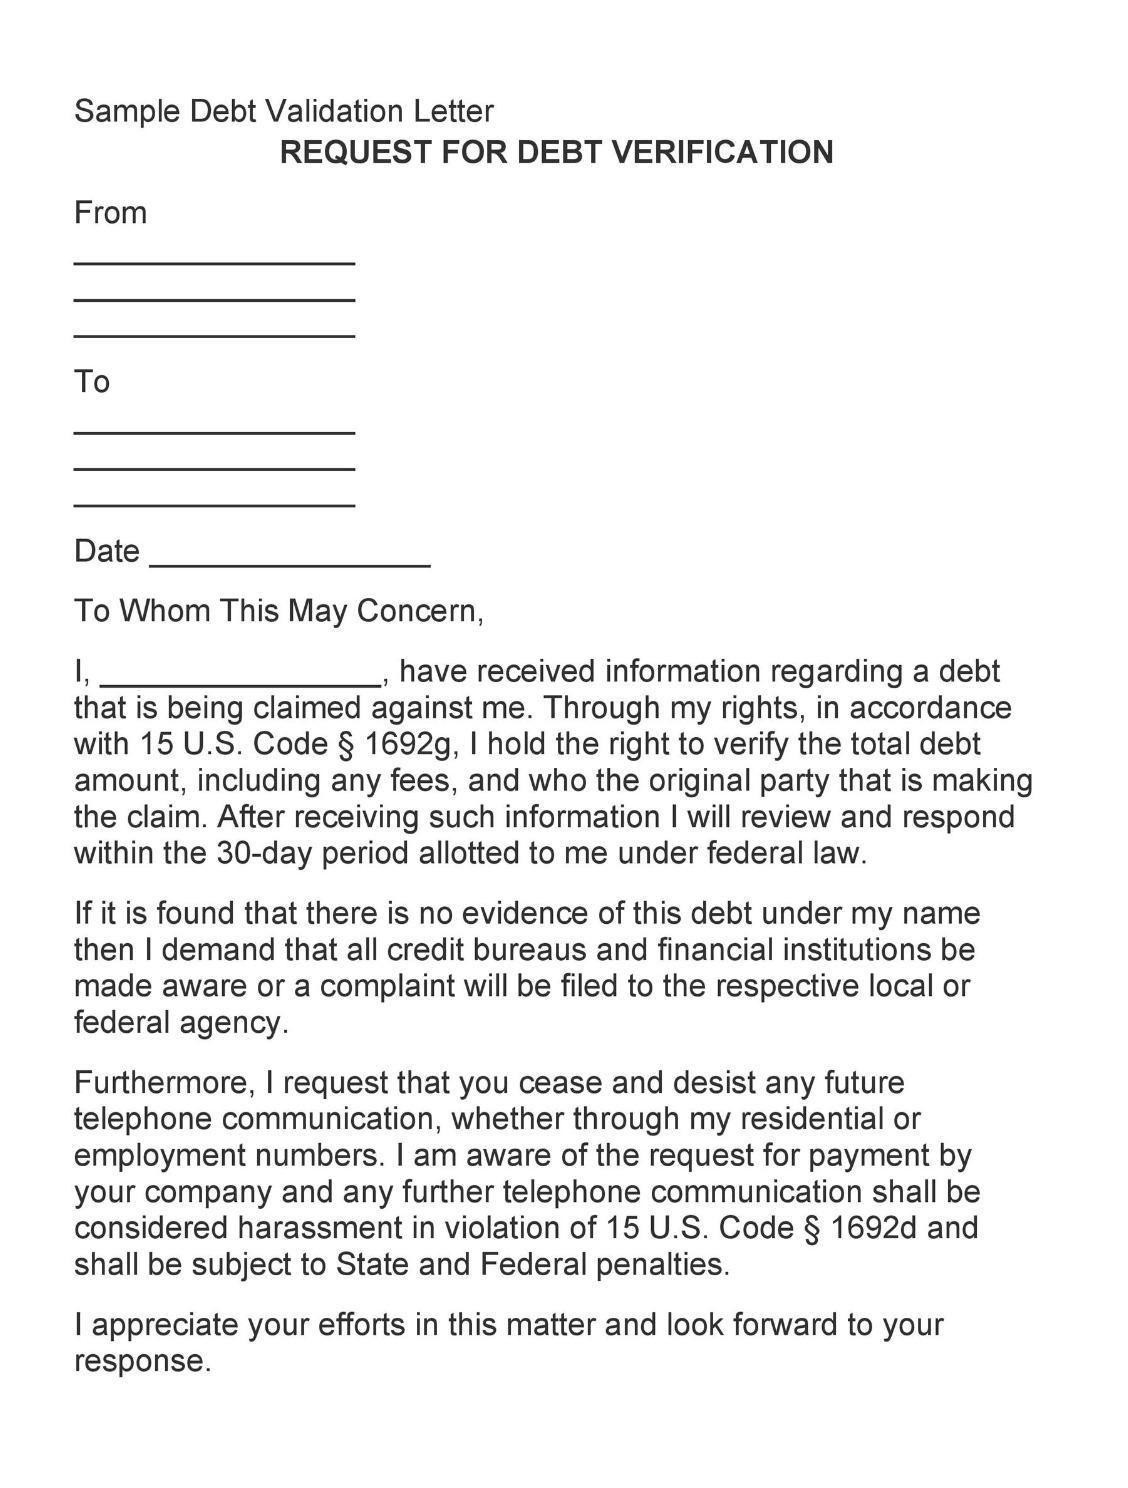 sample request for debt verification letter